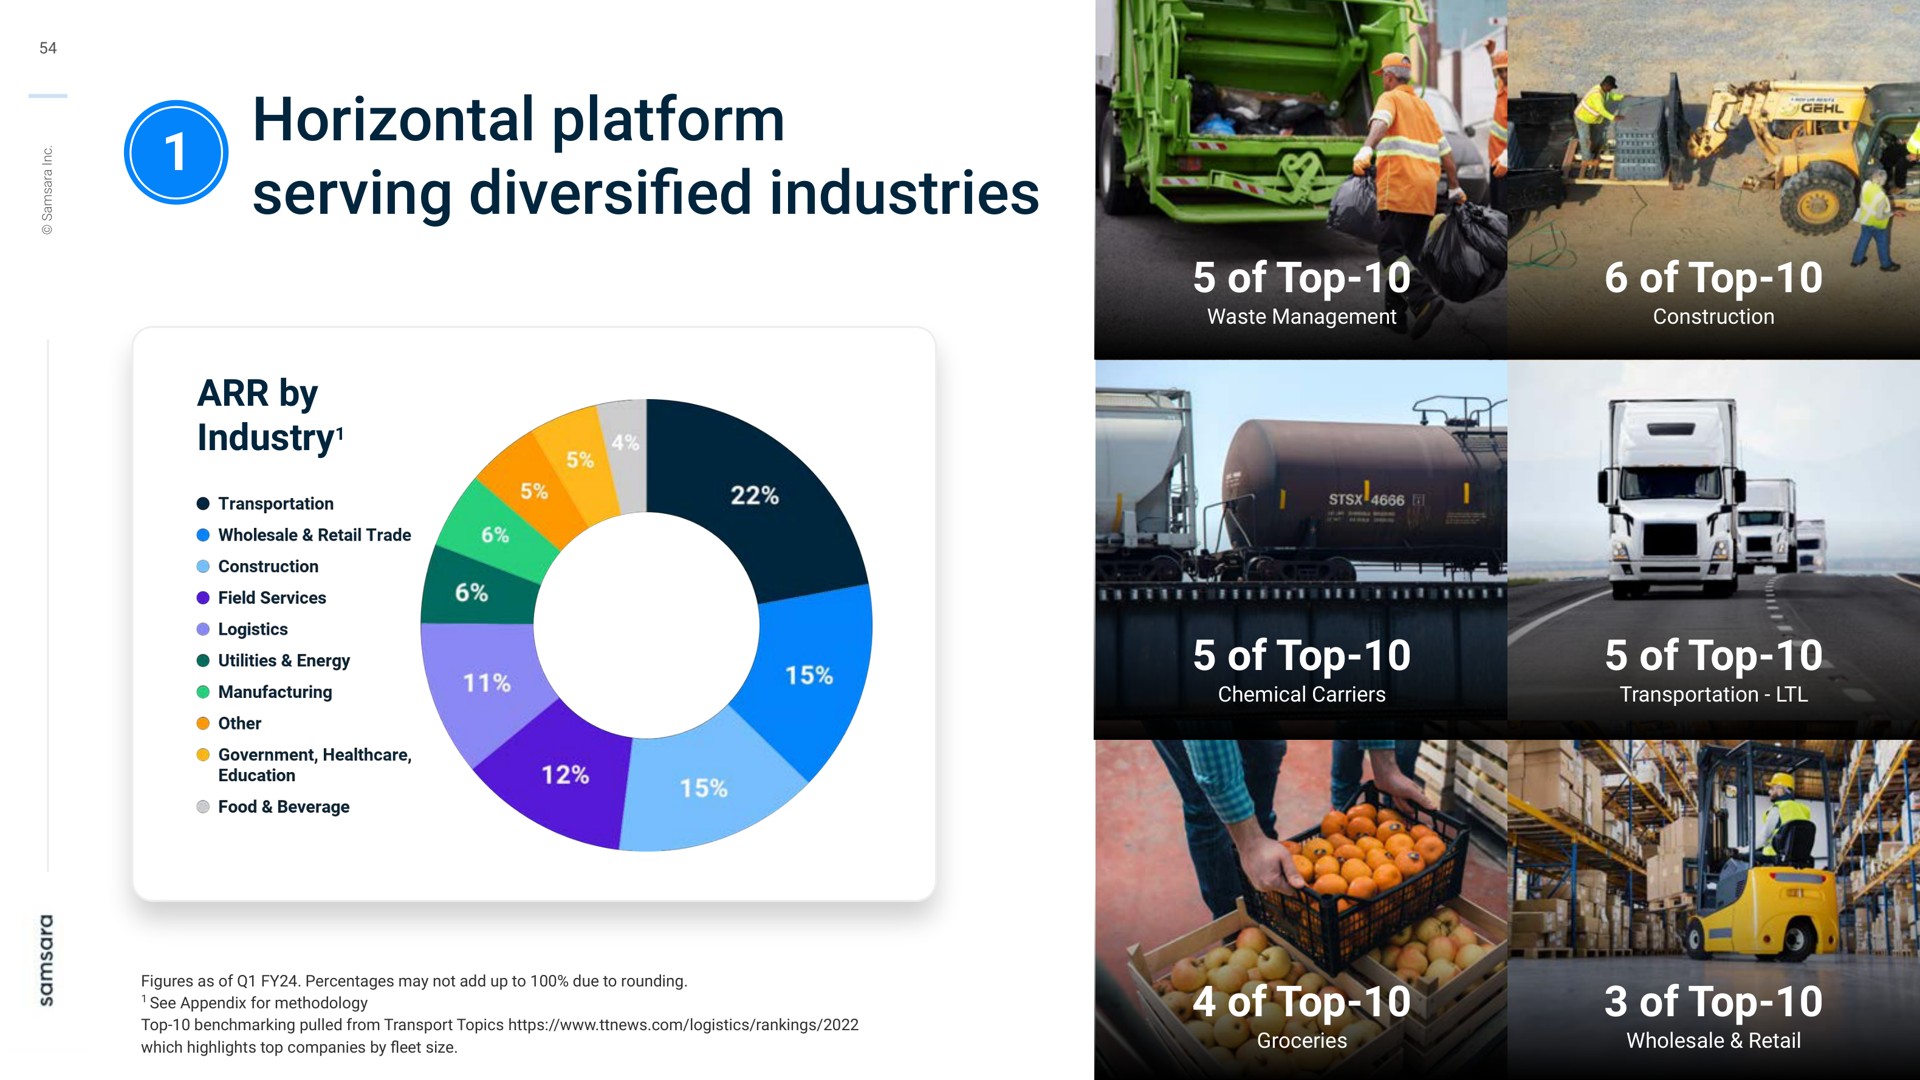 horizontal platform serving industries diversified aryl | Samsara